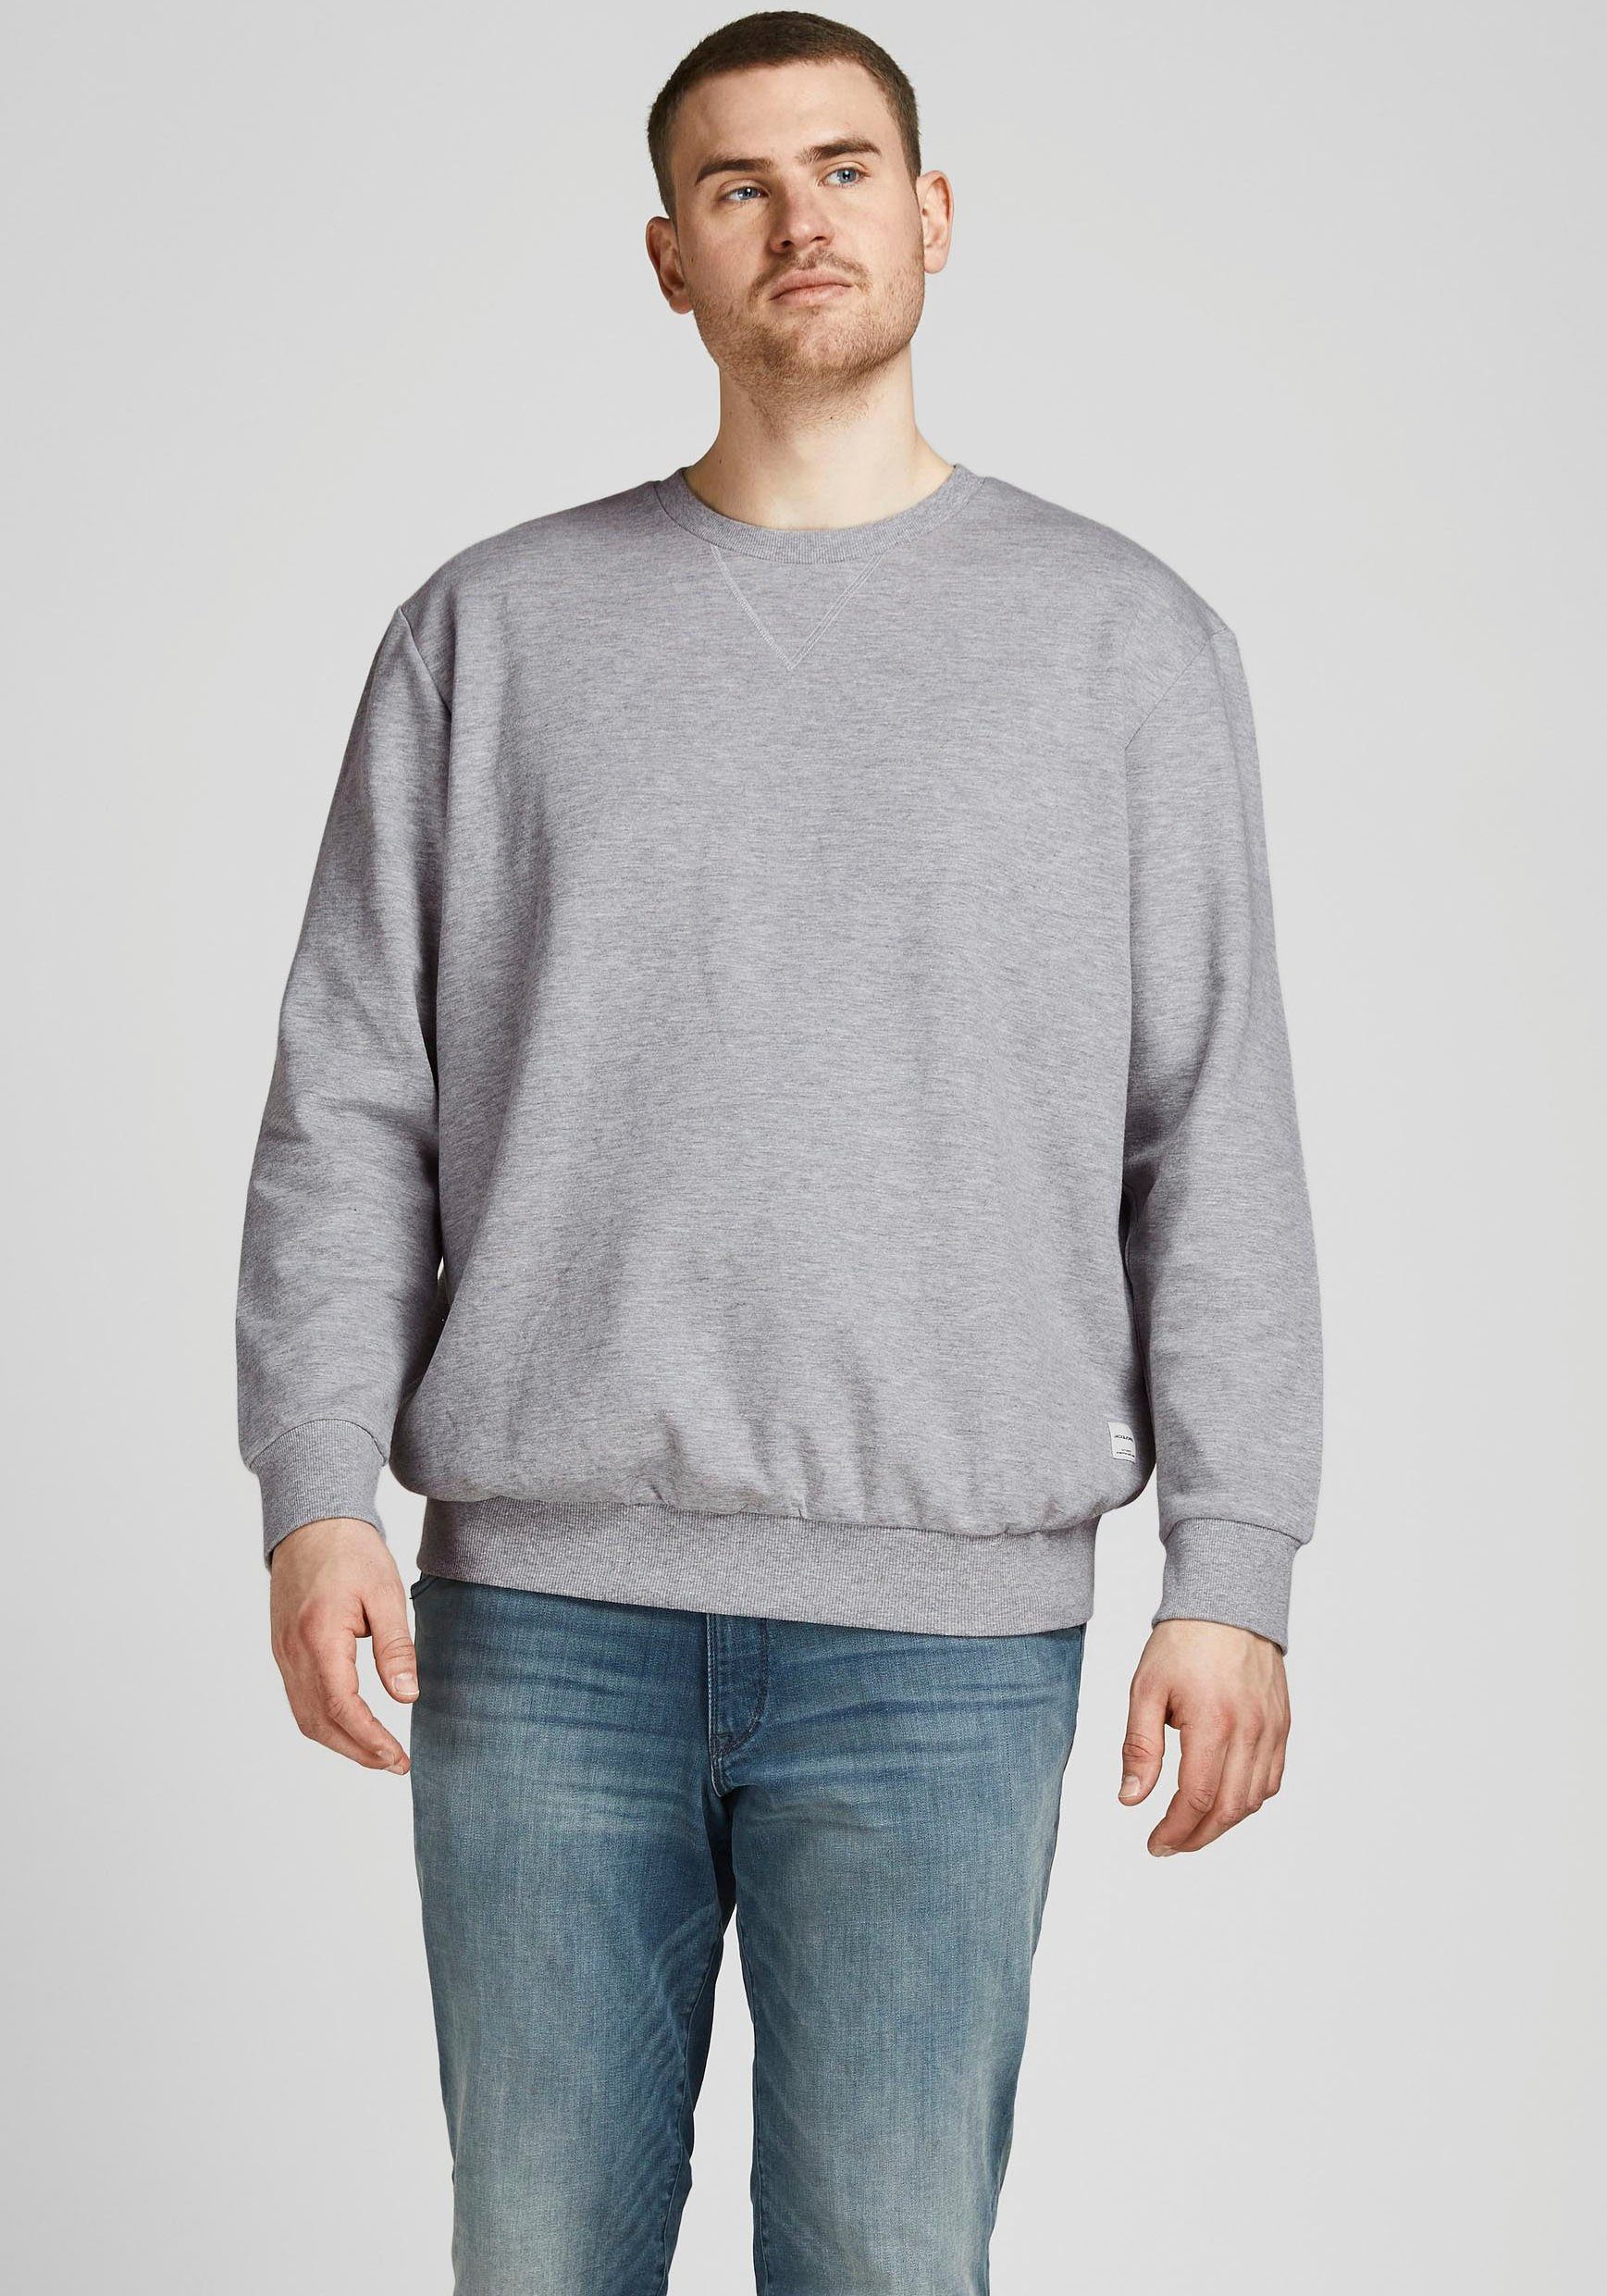 Jack & Jones PlusSize Sweatshirt (Packung) NECK CREW hellgrau-meliert BASIC SWEAT